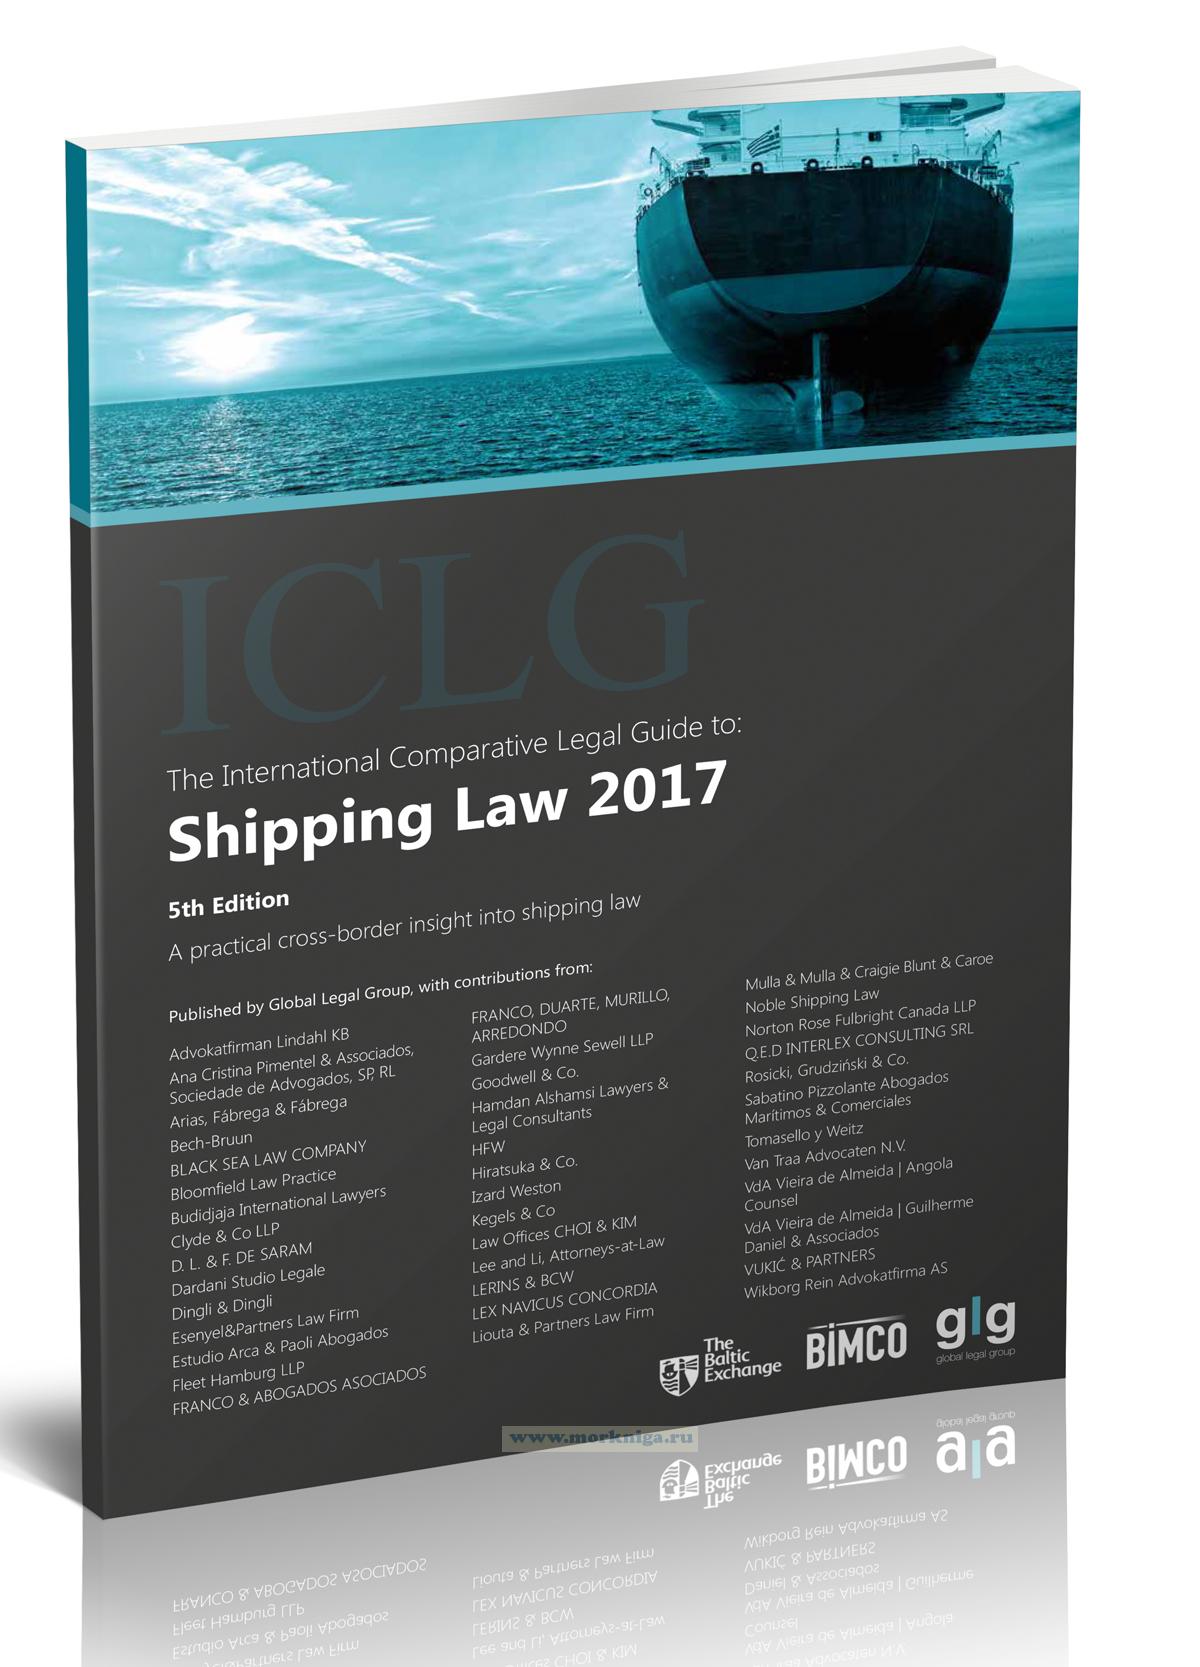 The International Corporative Legal Guide to: Shipping Law 2017/Международное корпоративное юридическое руководство по Морскому праву 2017